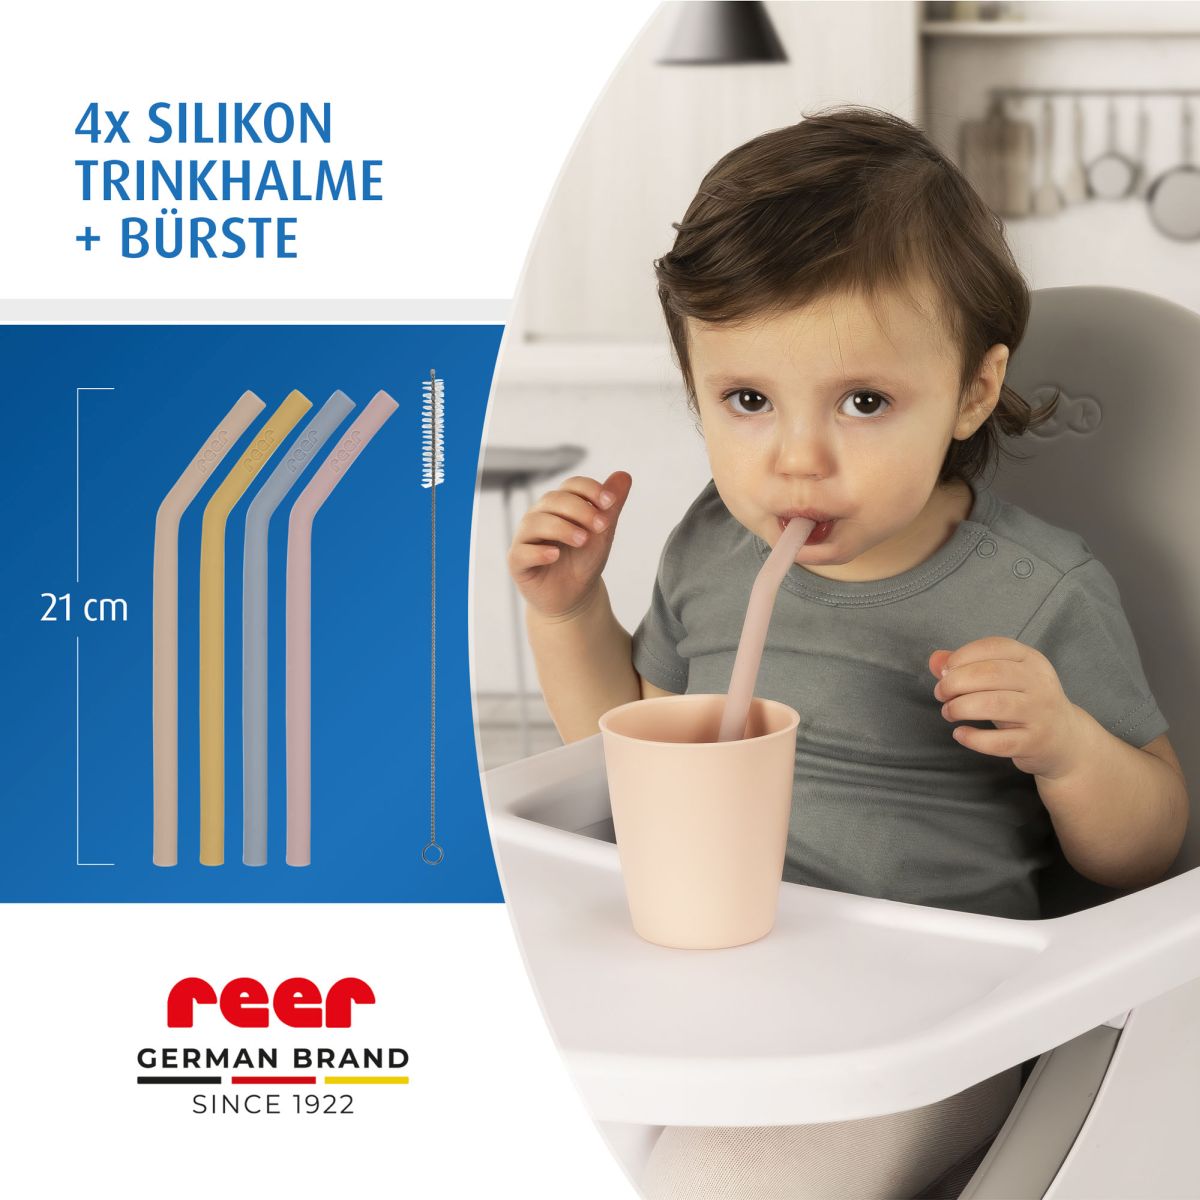 Silicone drinking straws